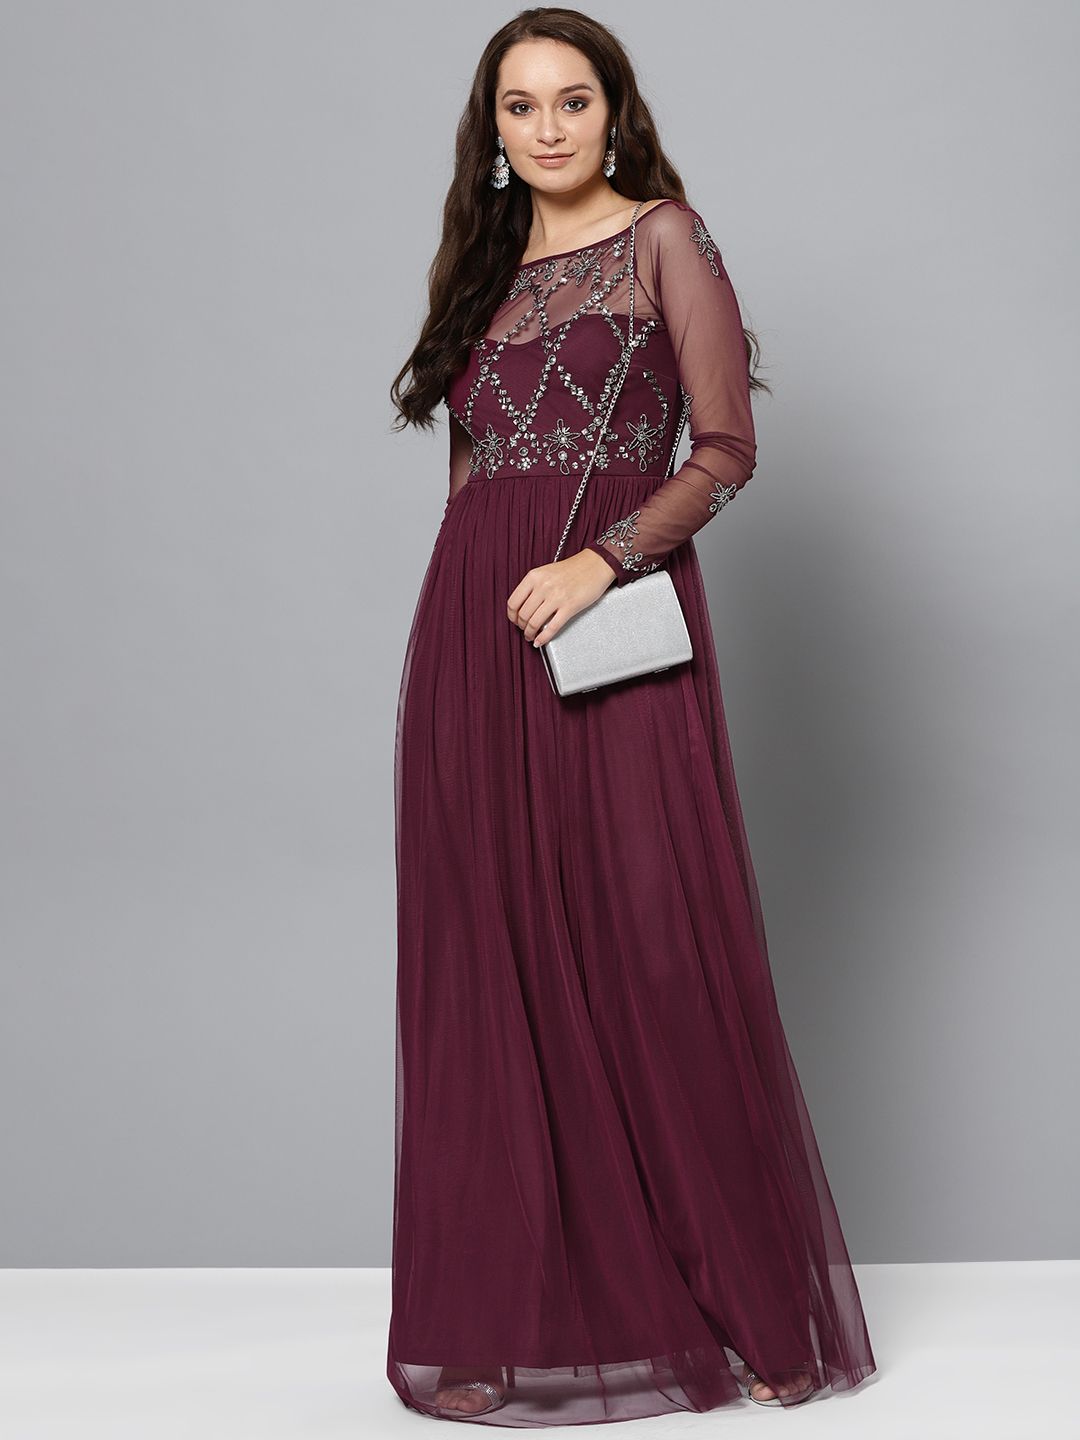 STREET 9 Burgundy Embellished Detail Maxi Dress Price in India